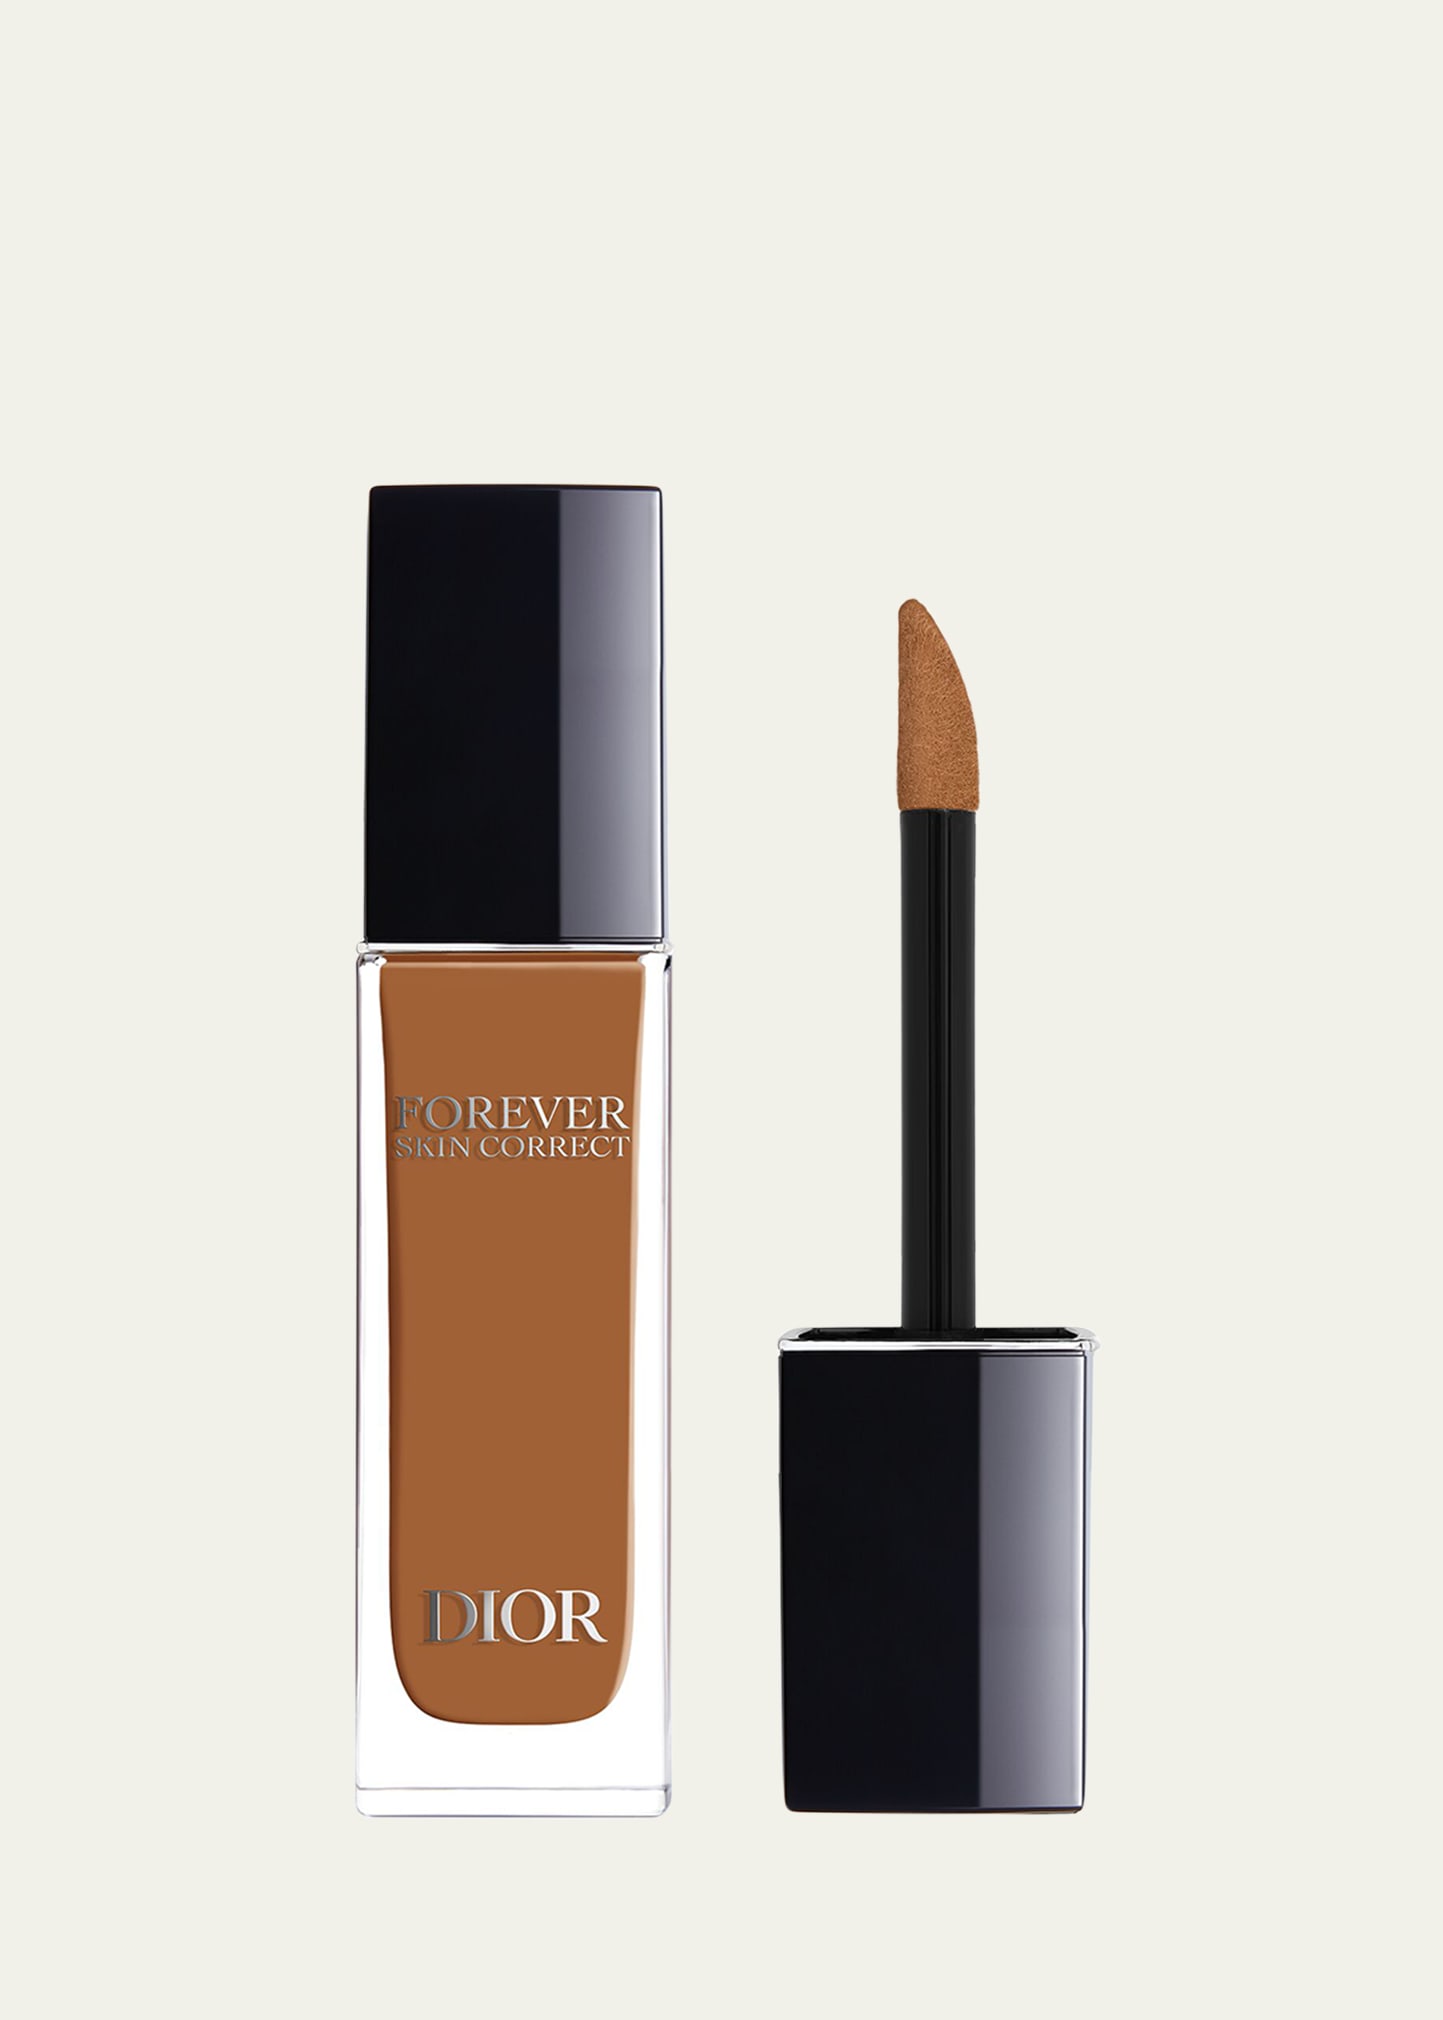 Dior Forever Skin Correct Full-coverage Concealer In 7 N Neutral